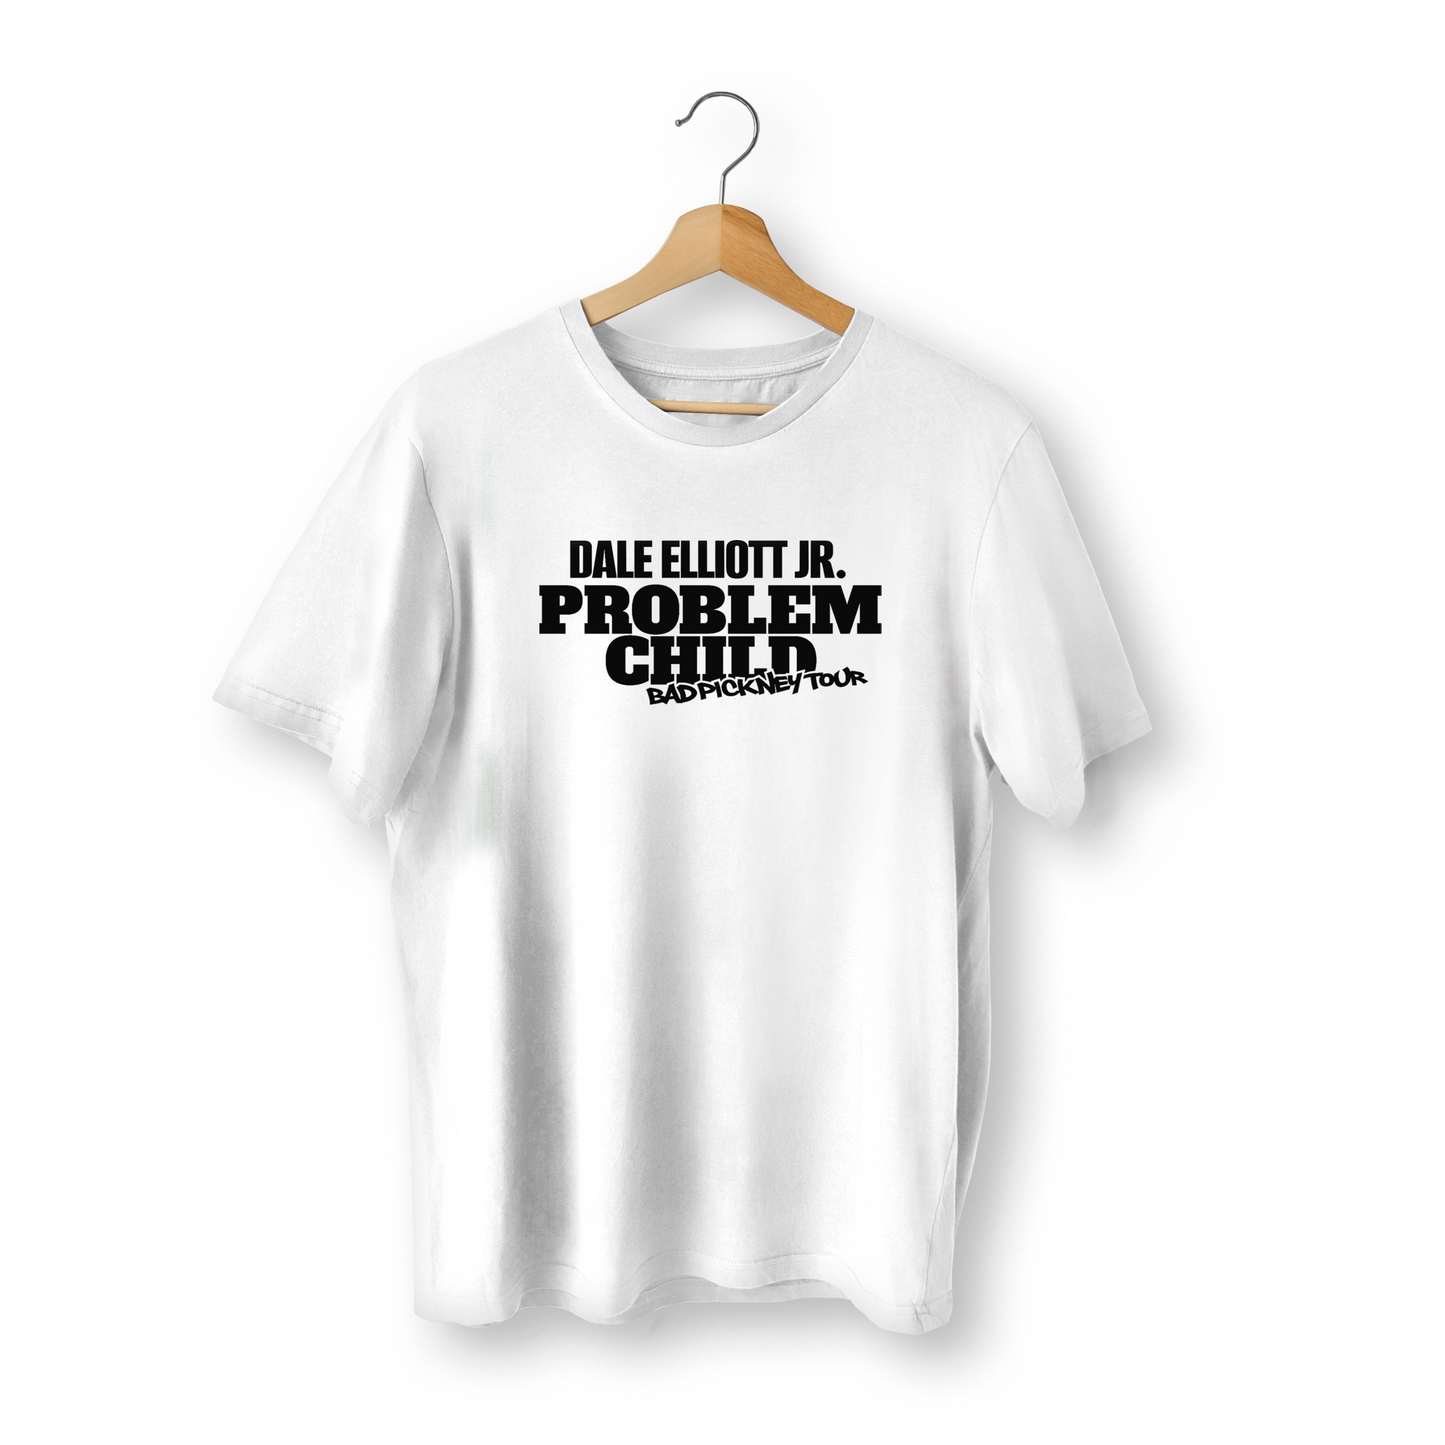 Problem Child "Bad Pickney" Tour T-Shirt